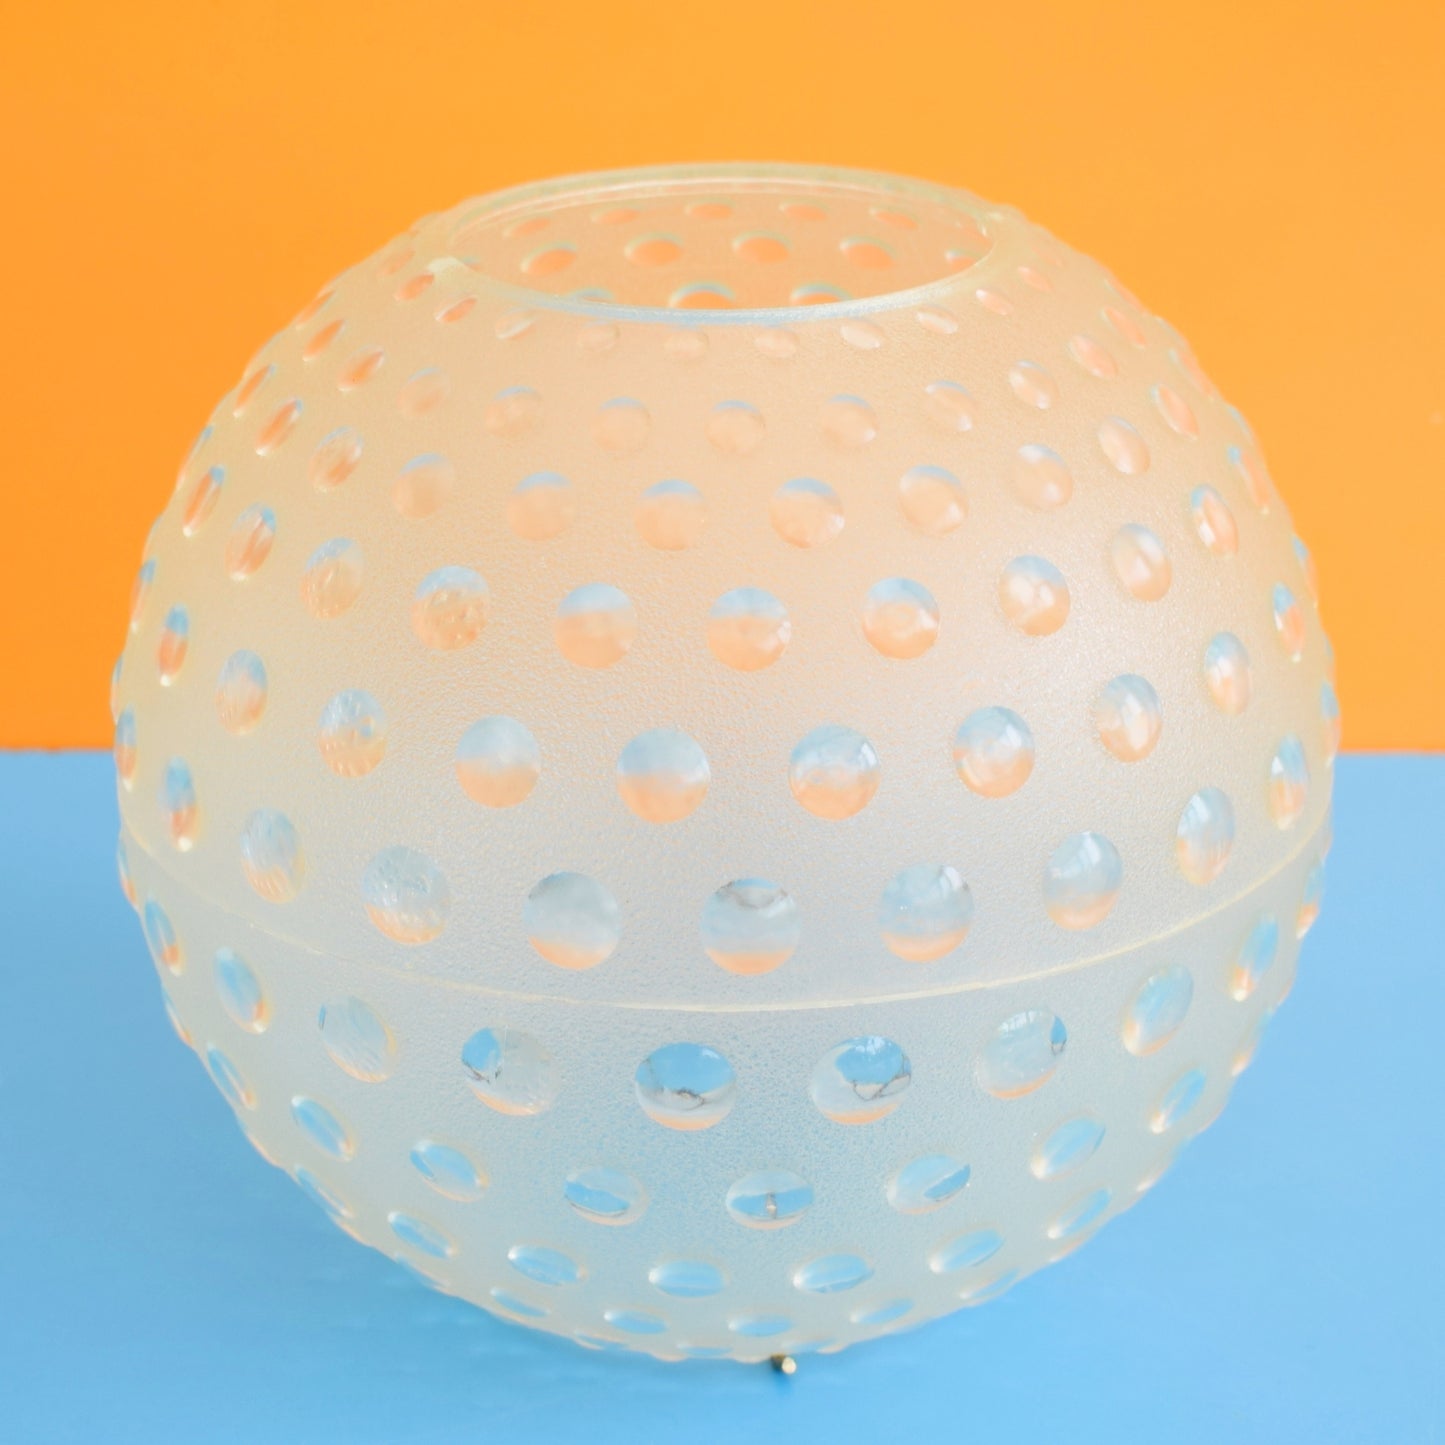 Vintage 1970s Plastic Bubble Globe Light Shade - Clear